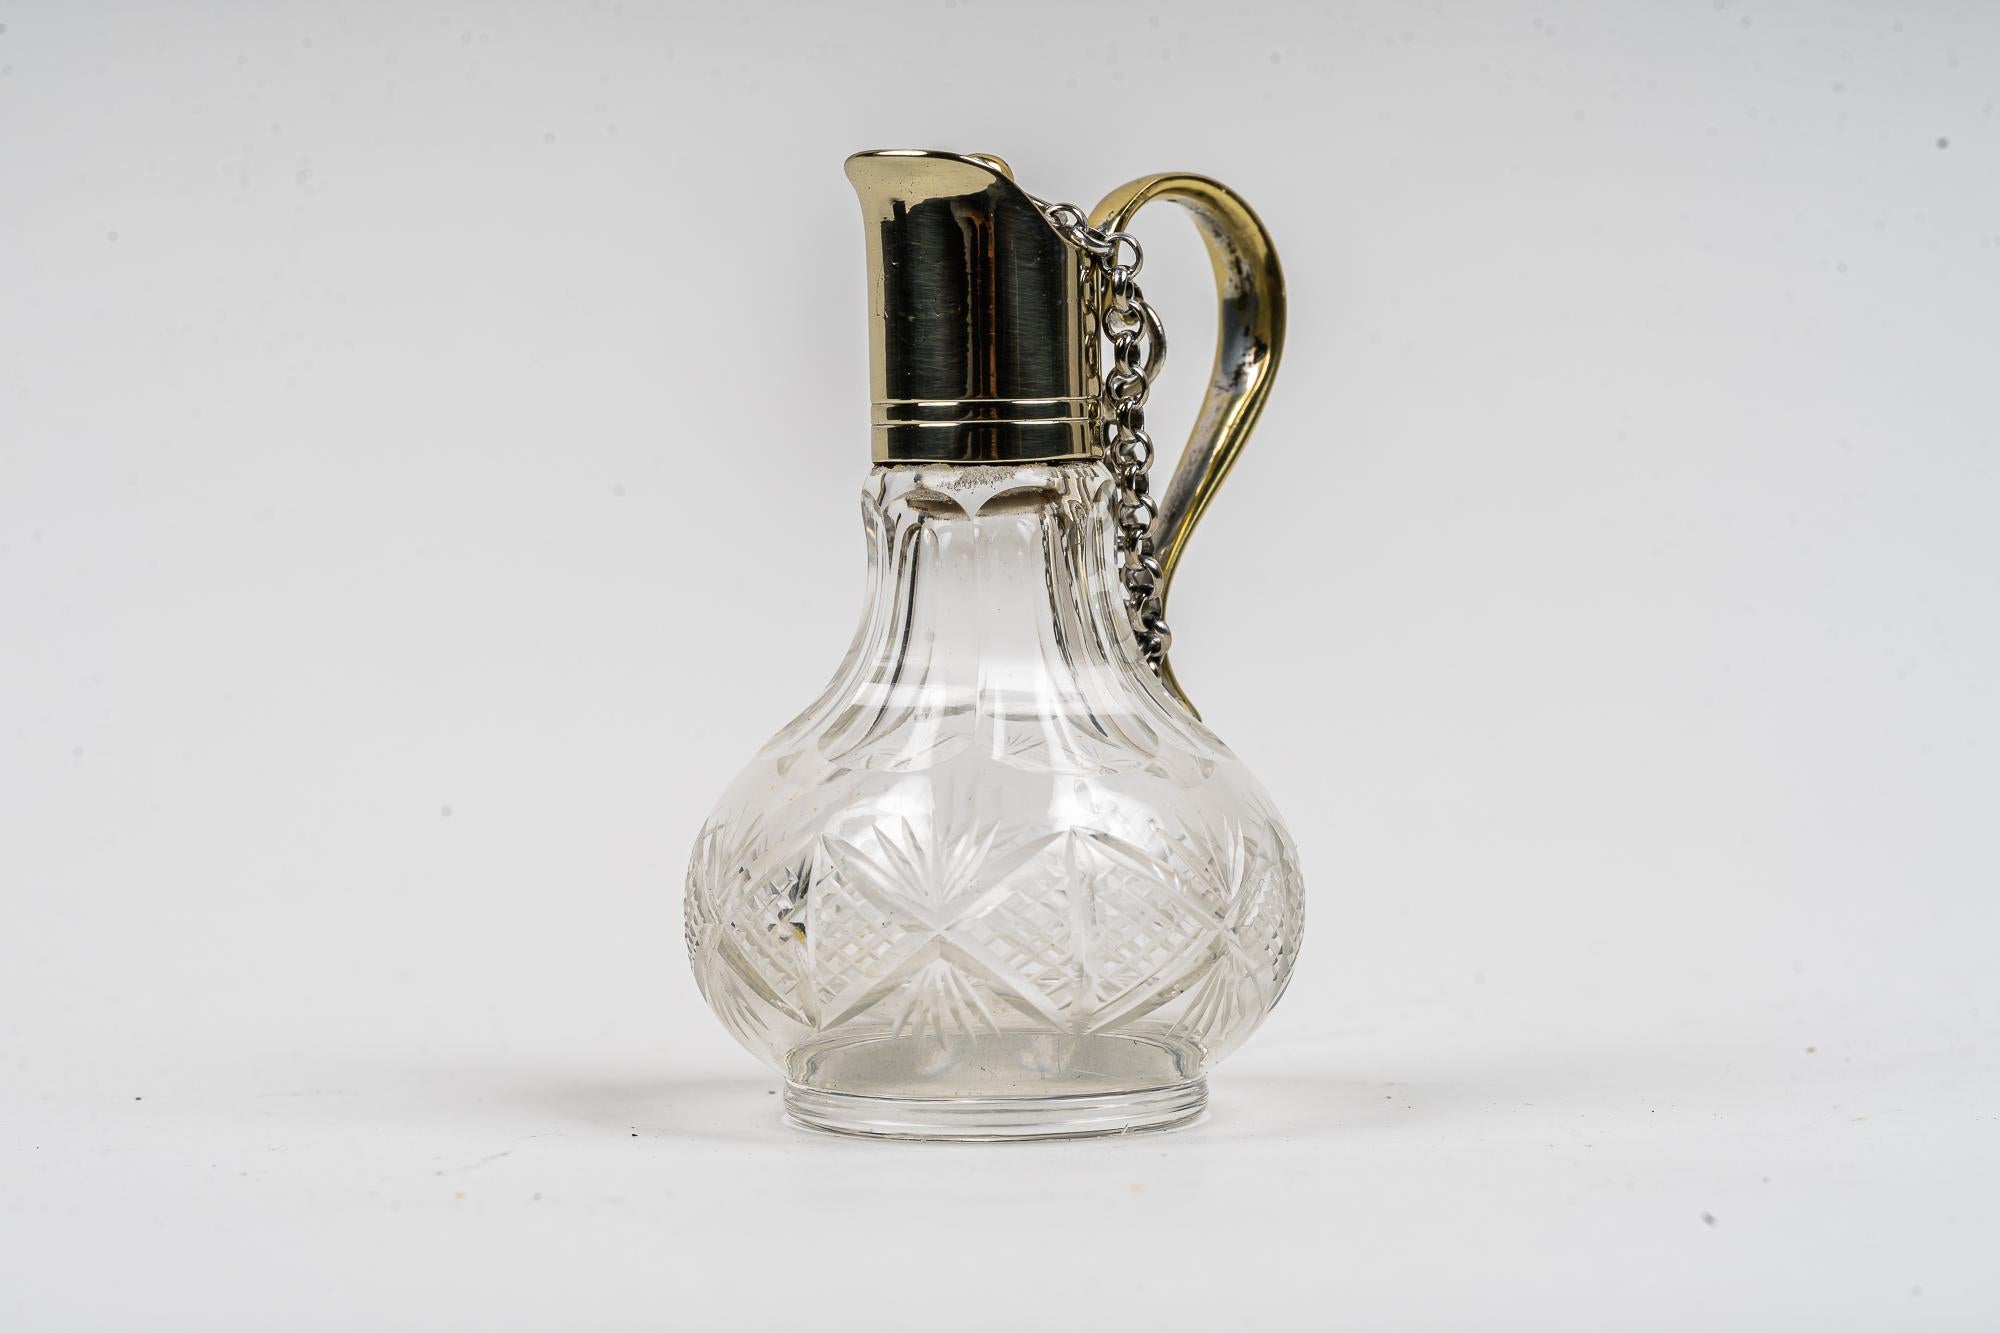 Art Deco vinegar bottle vienna around 1920s
Alpaca polished and stove - enamelled 
Cut glass.